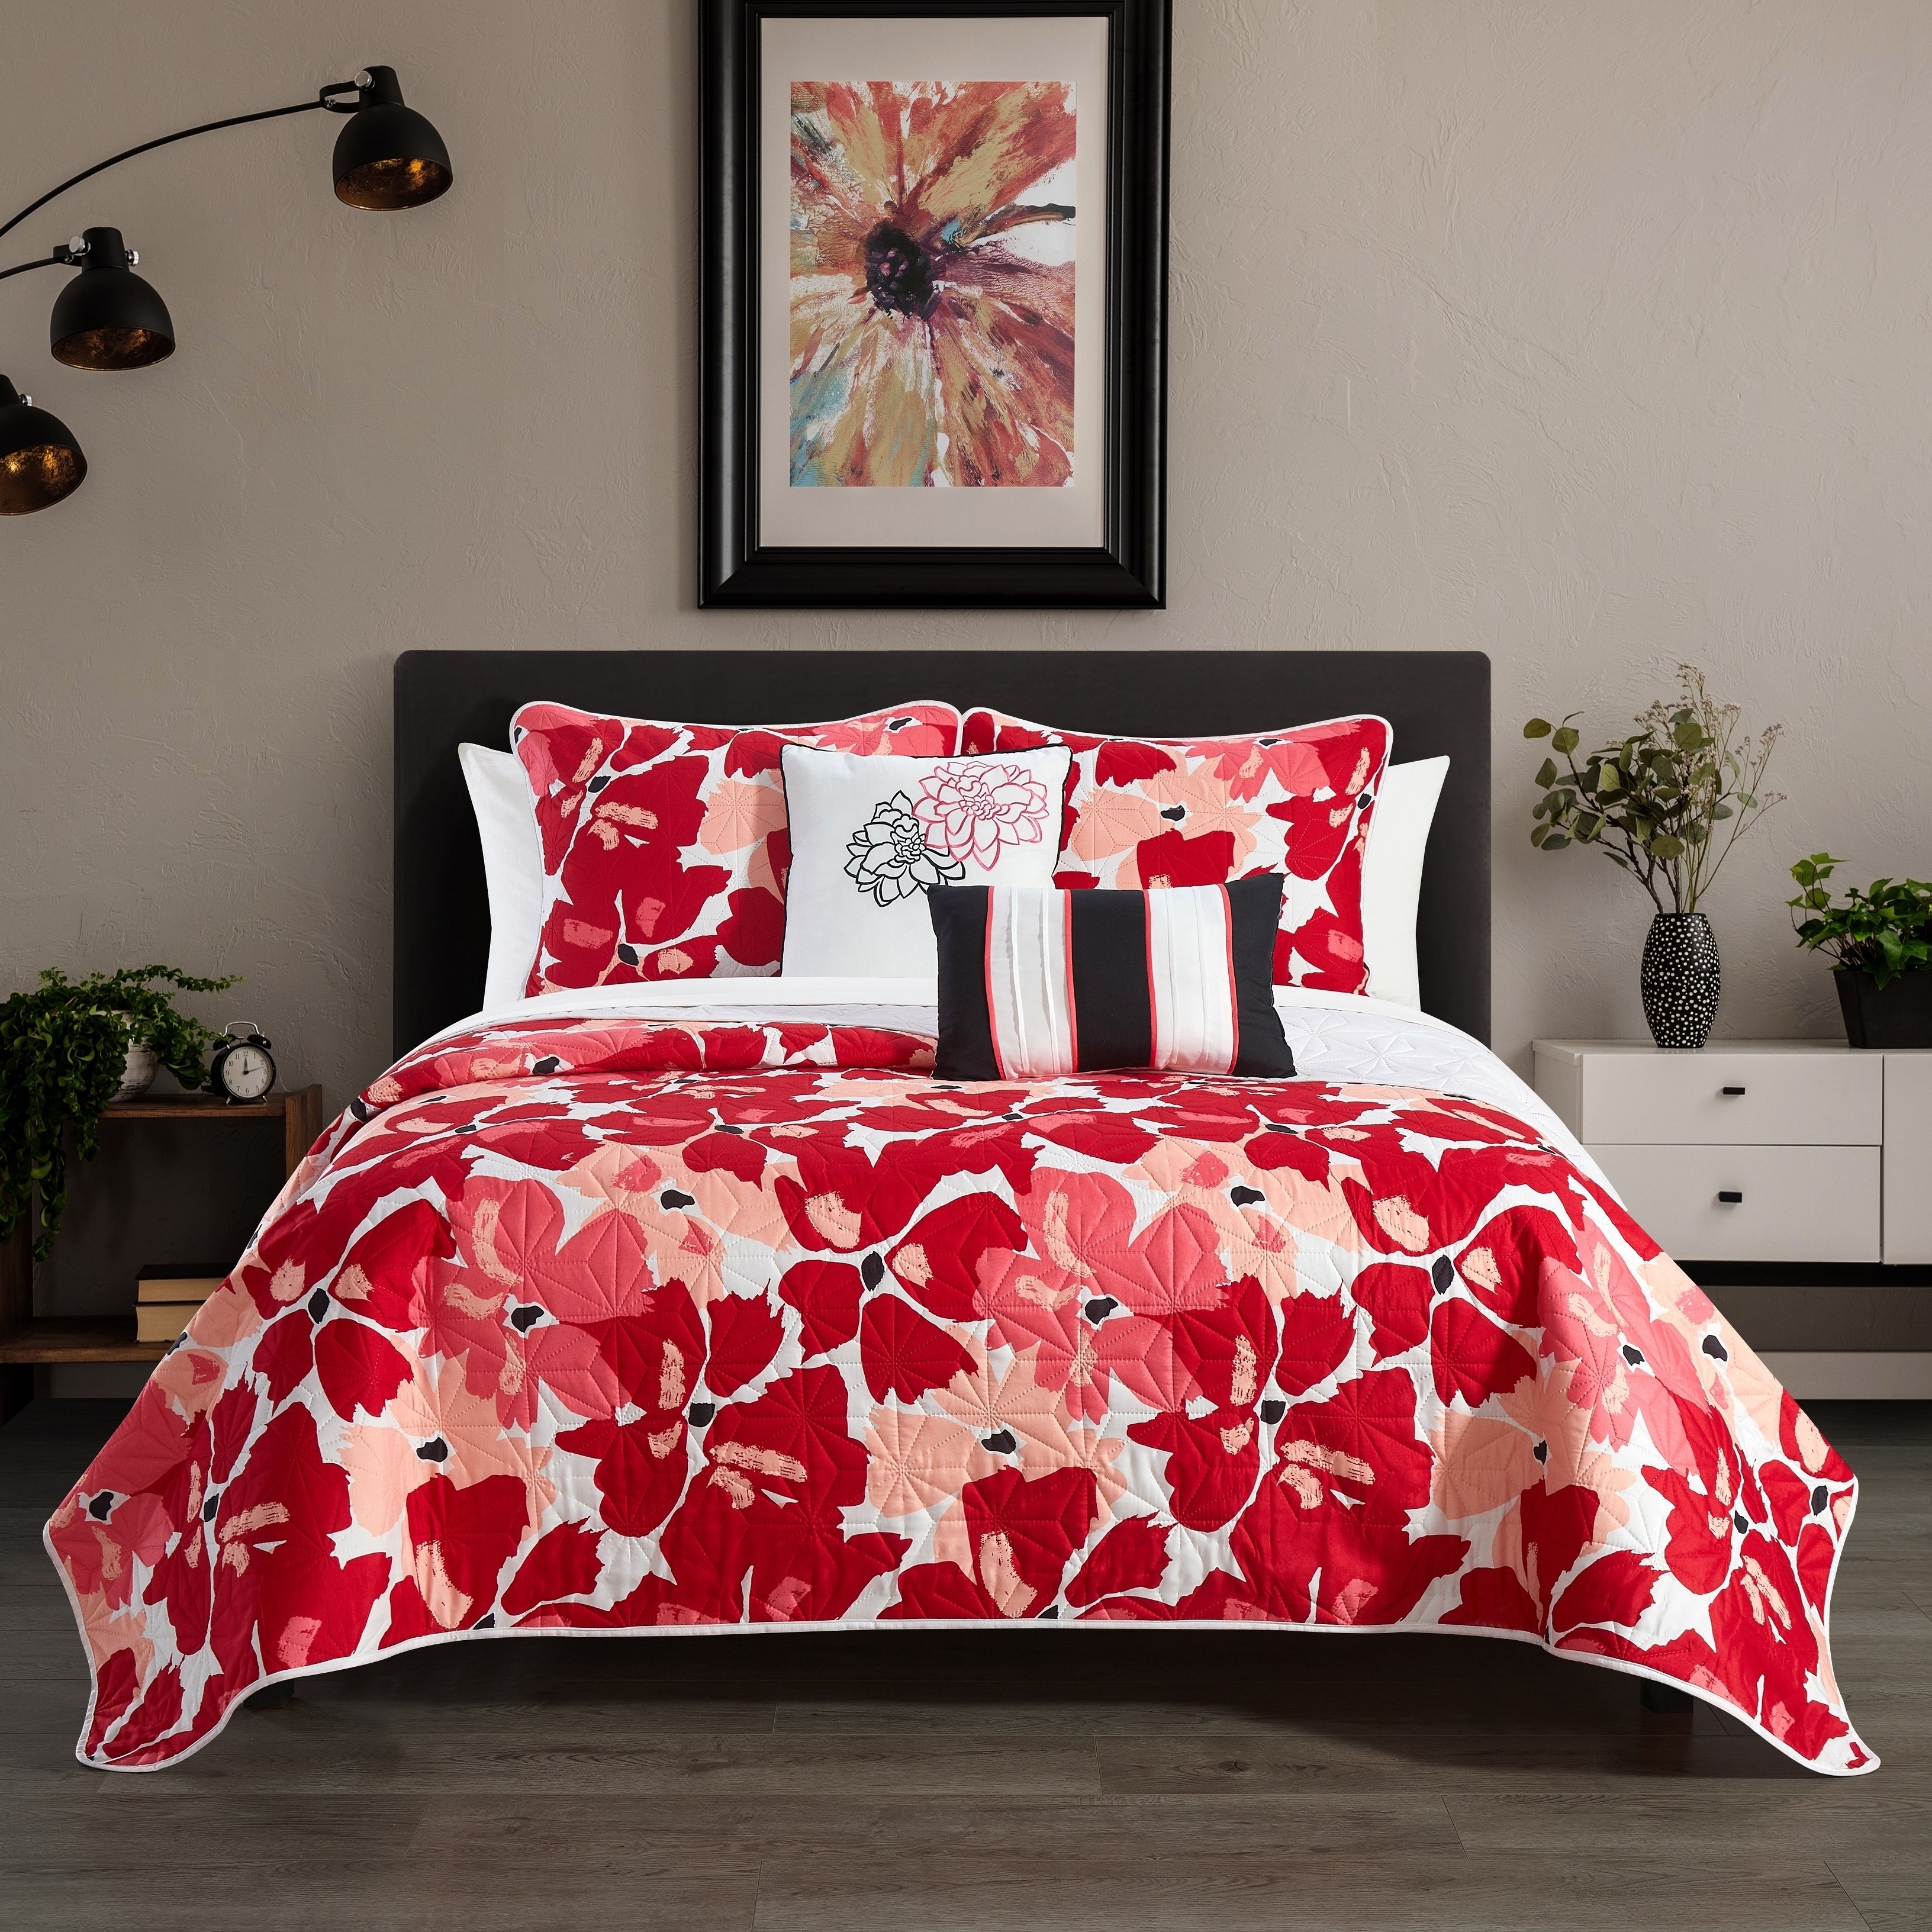 Aster 5 Piece Quilt Set Contemporary Floral Design Bedding - Pink, King